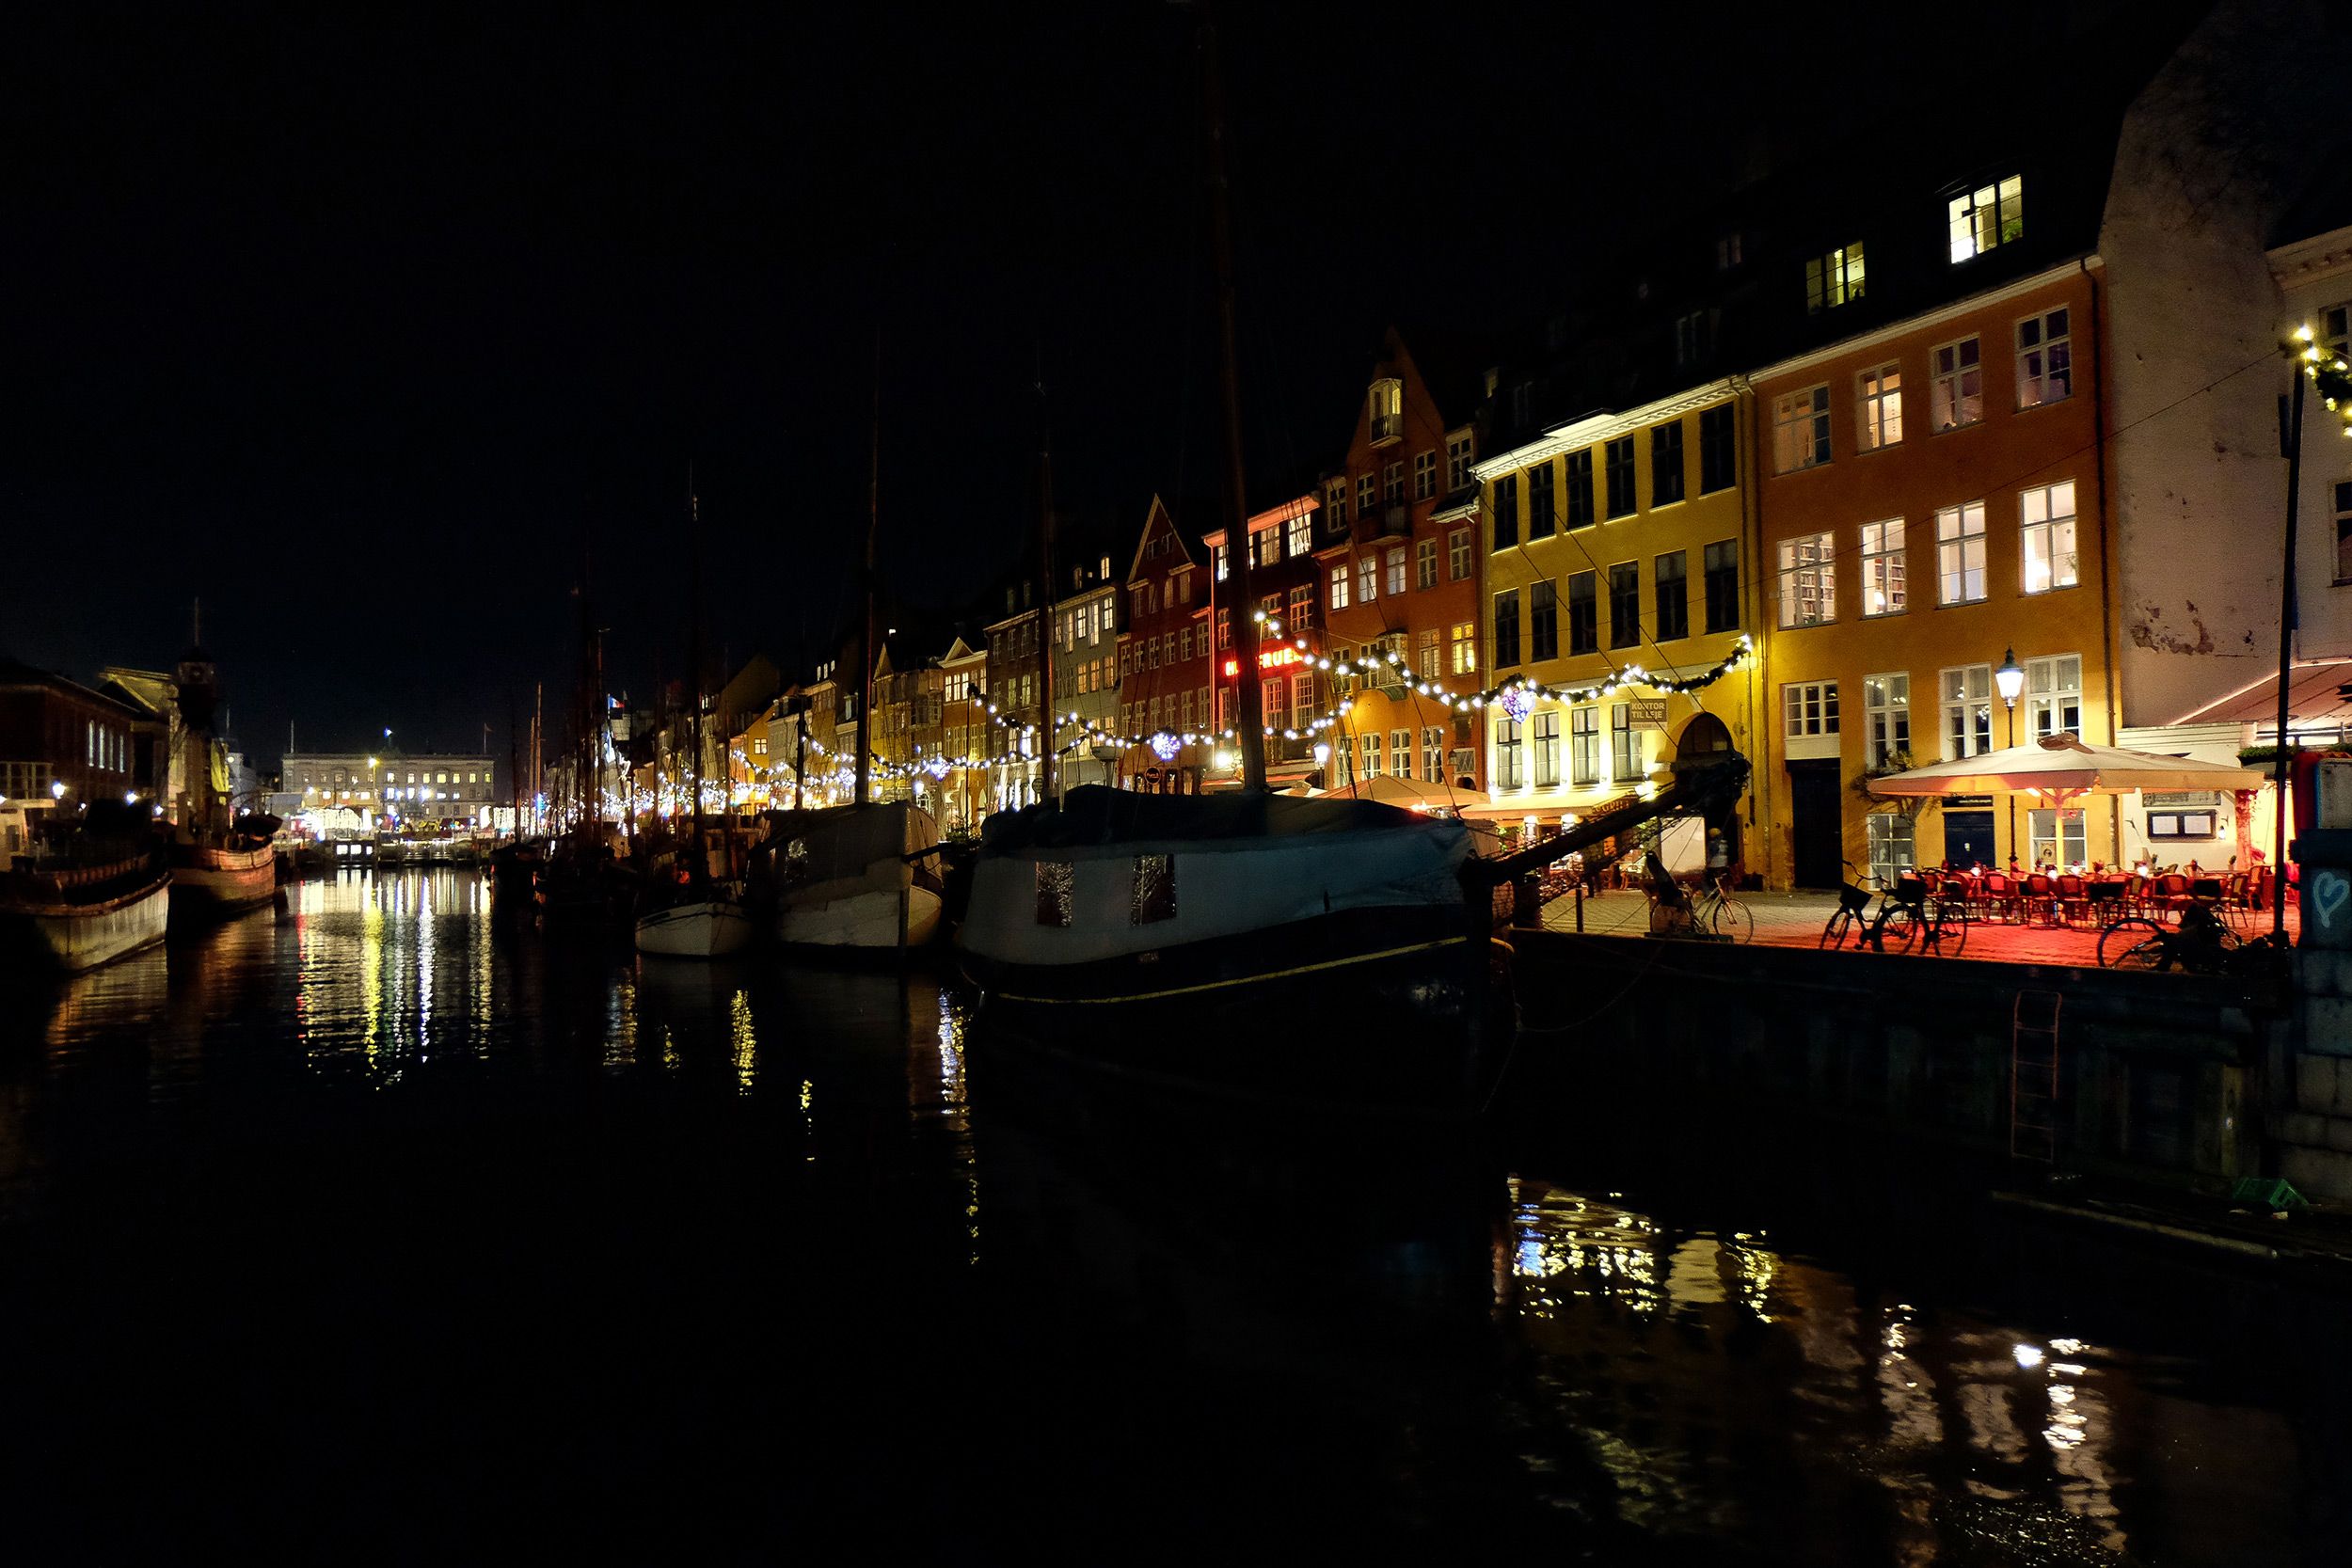 Nyhavn at night